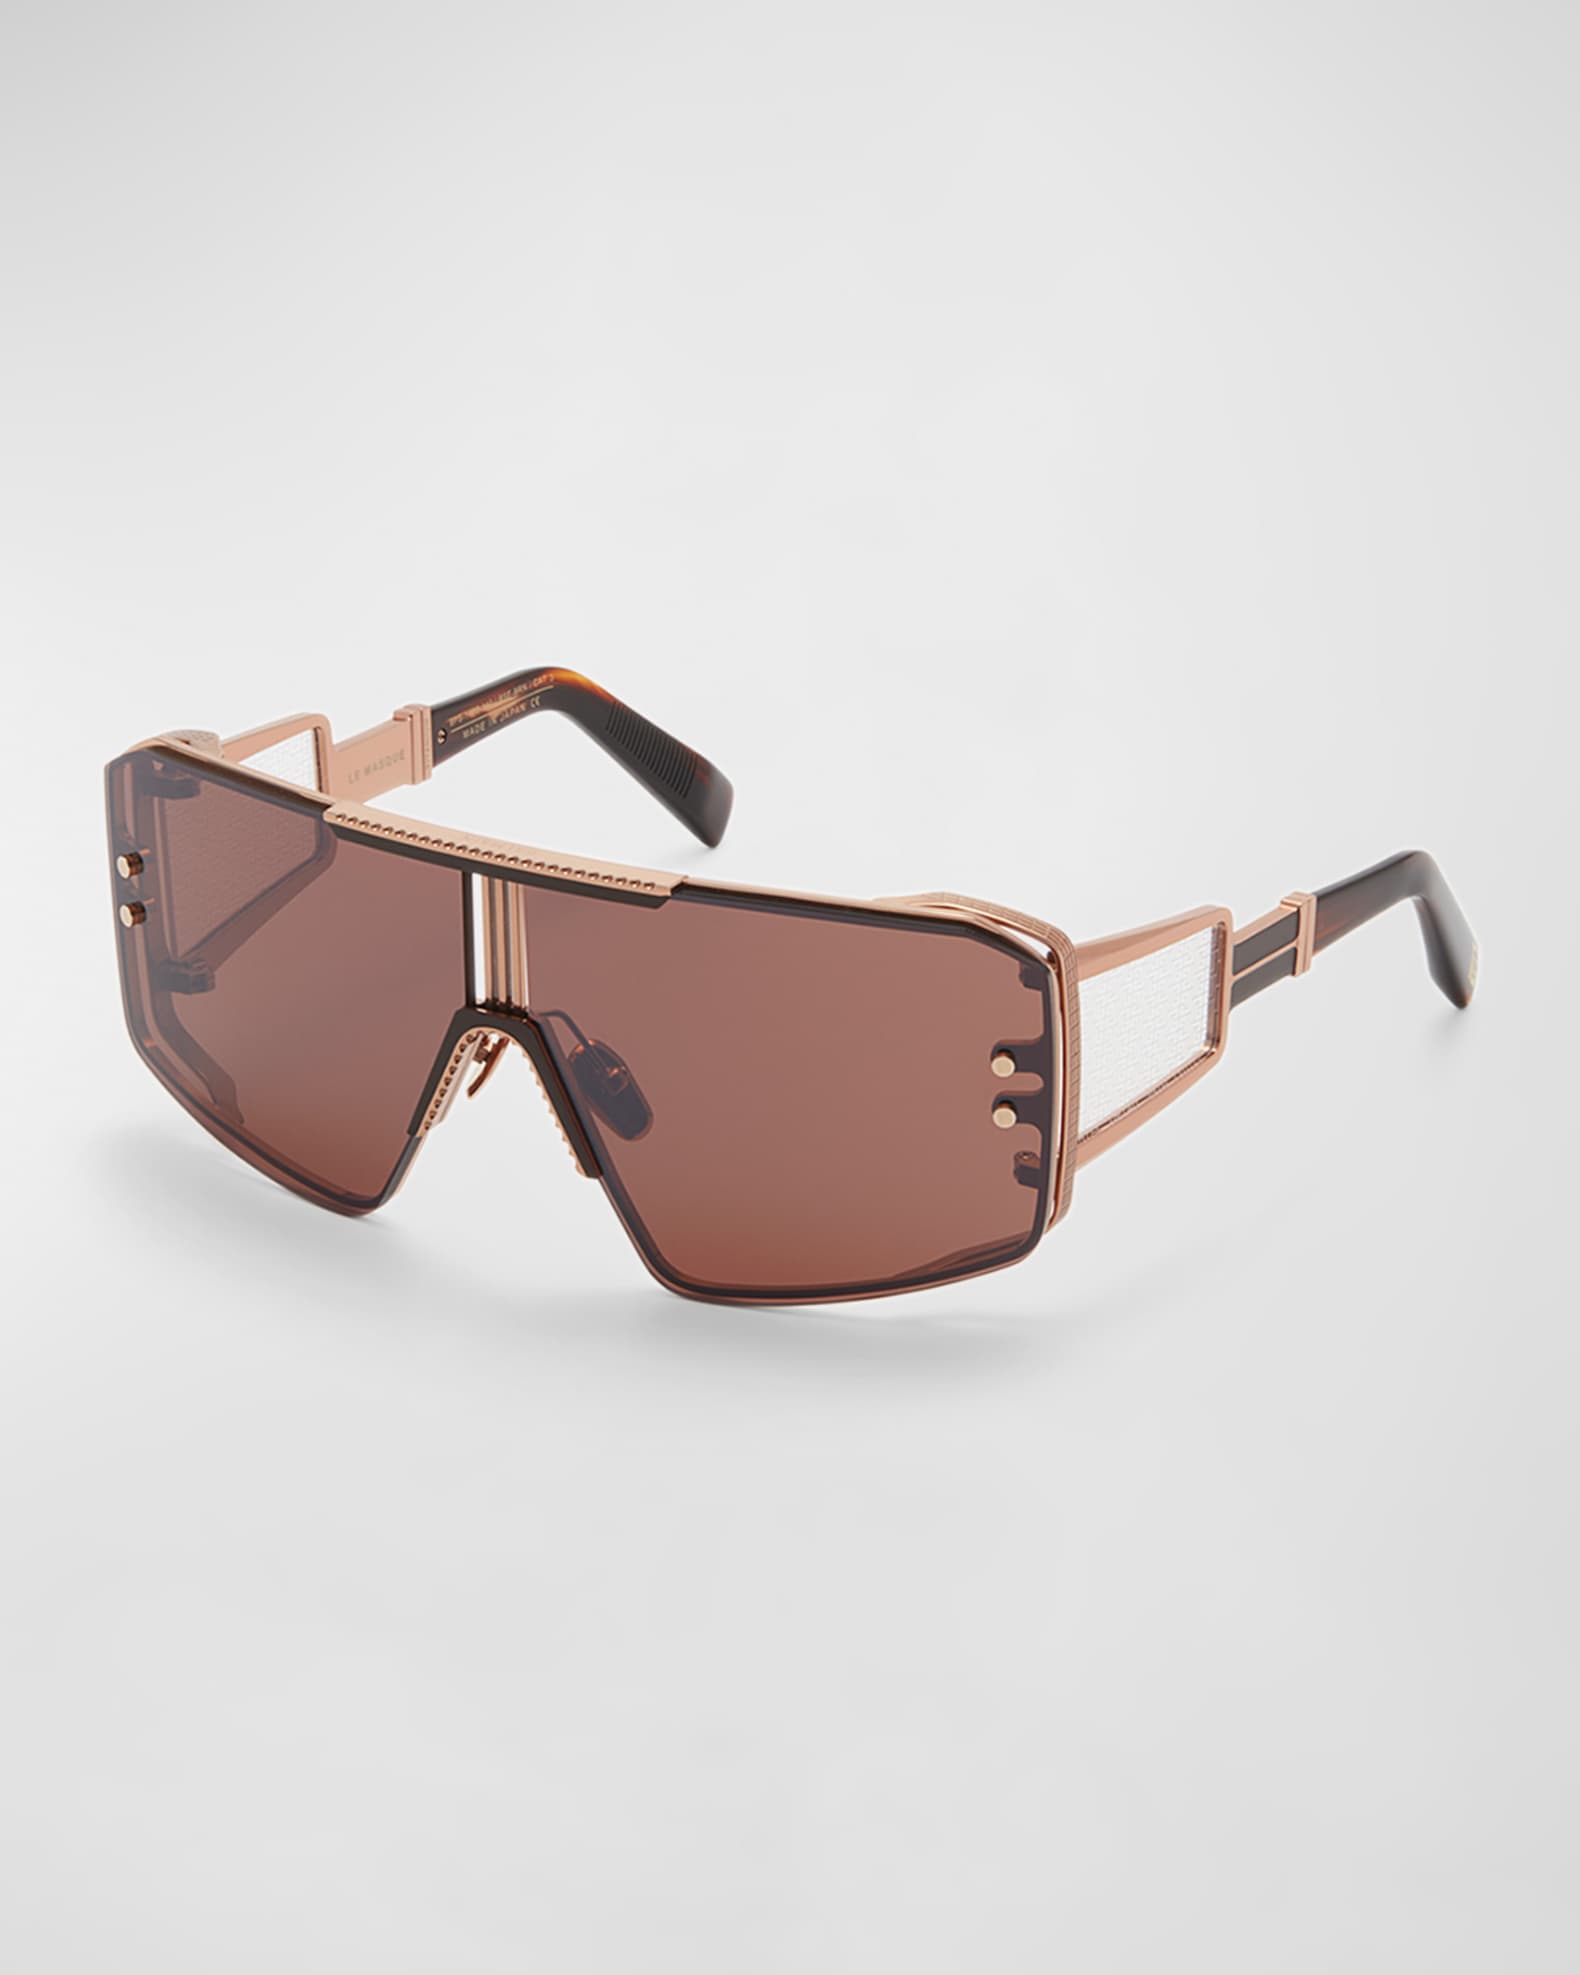 Louis Vuitton Attitude Sunglasses Silver Acetate & Metal. Size U